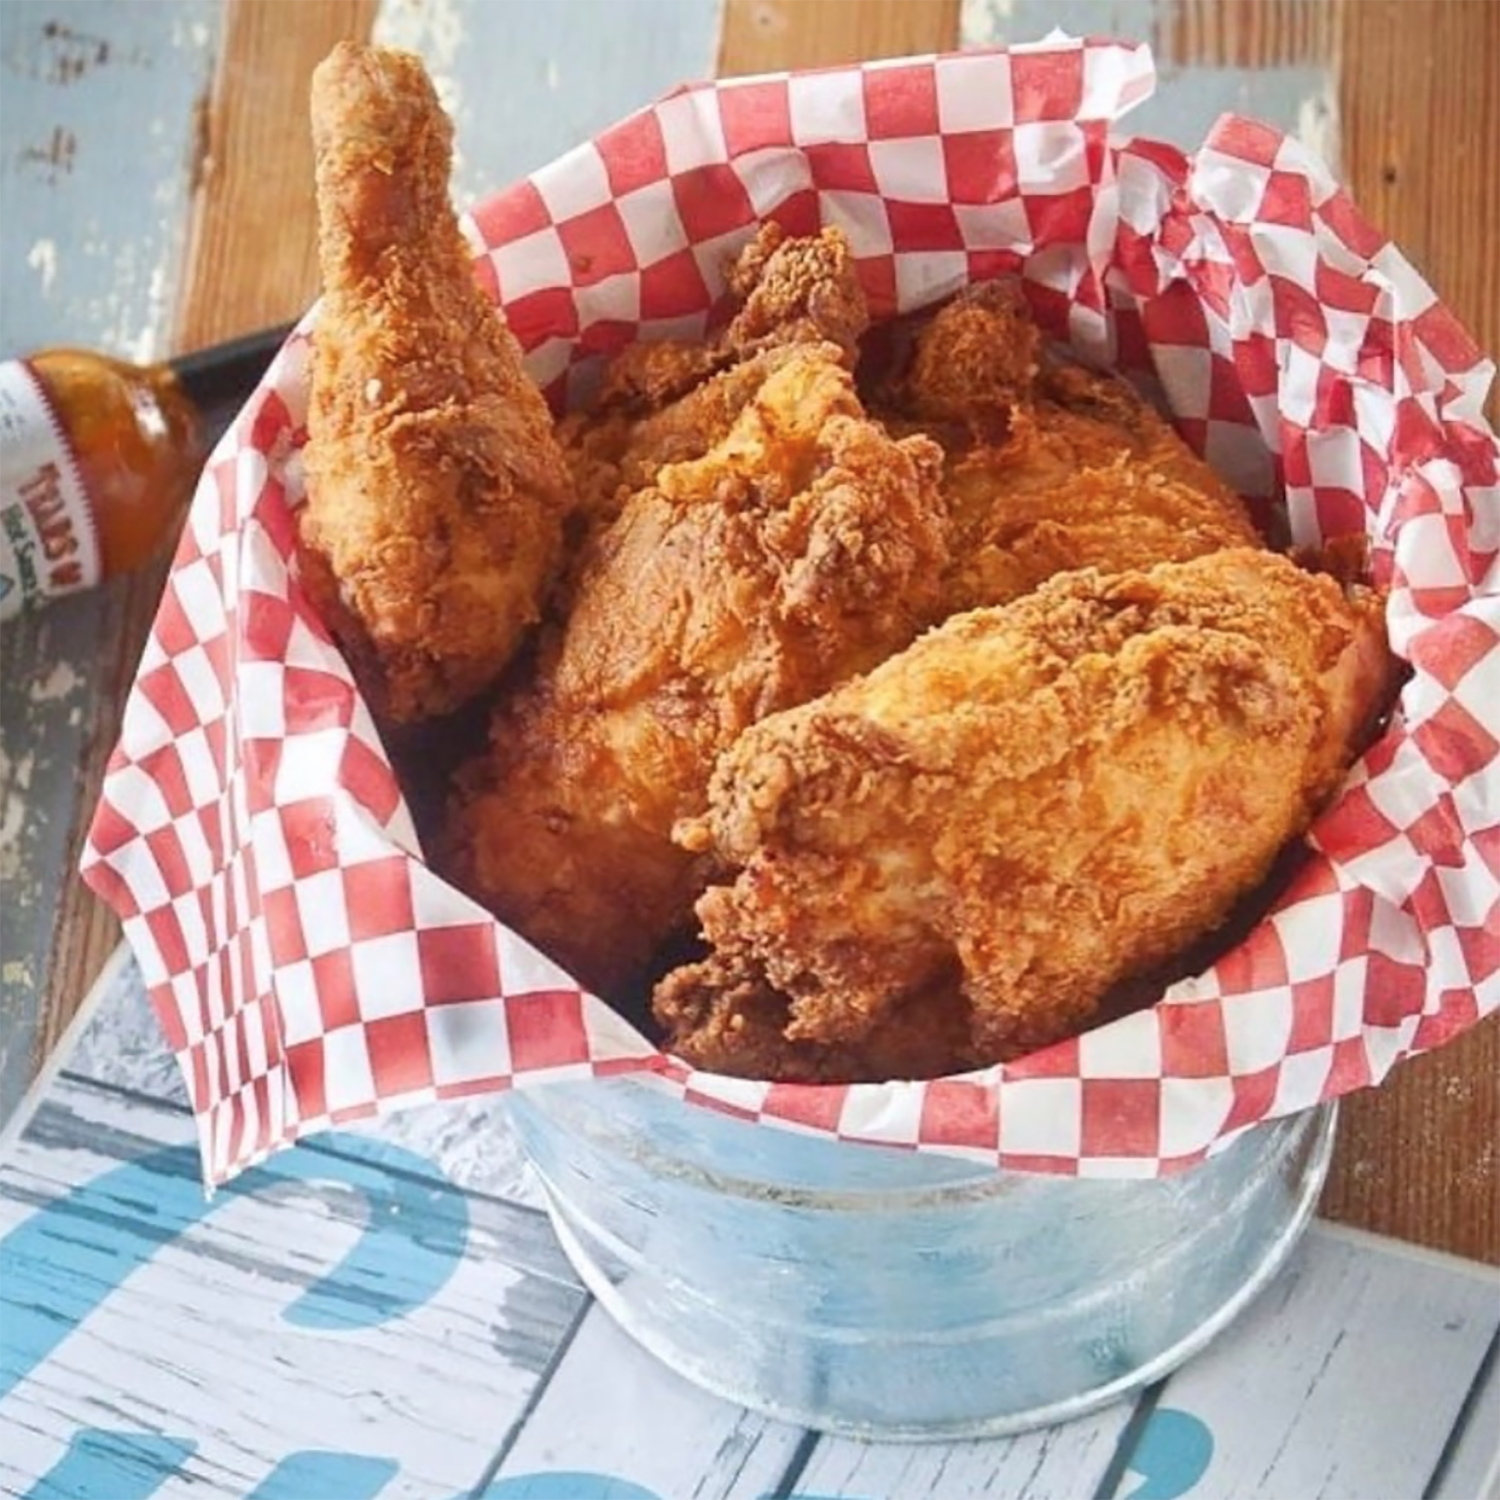 Bucket of fried chicken